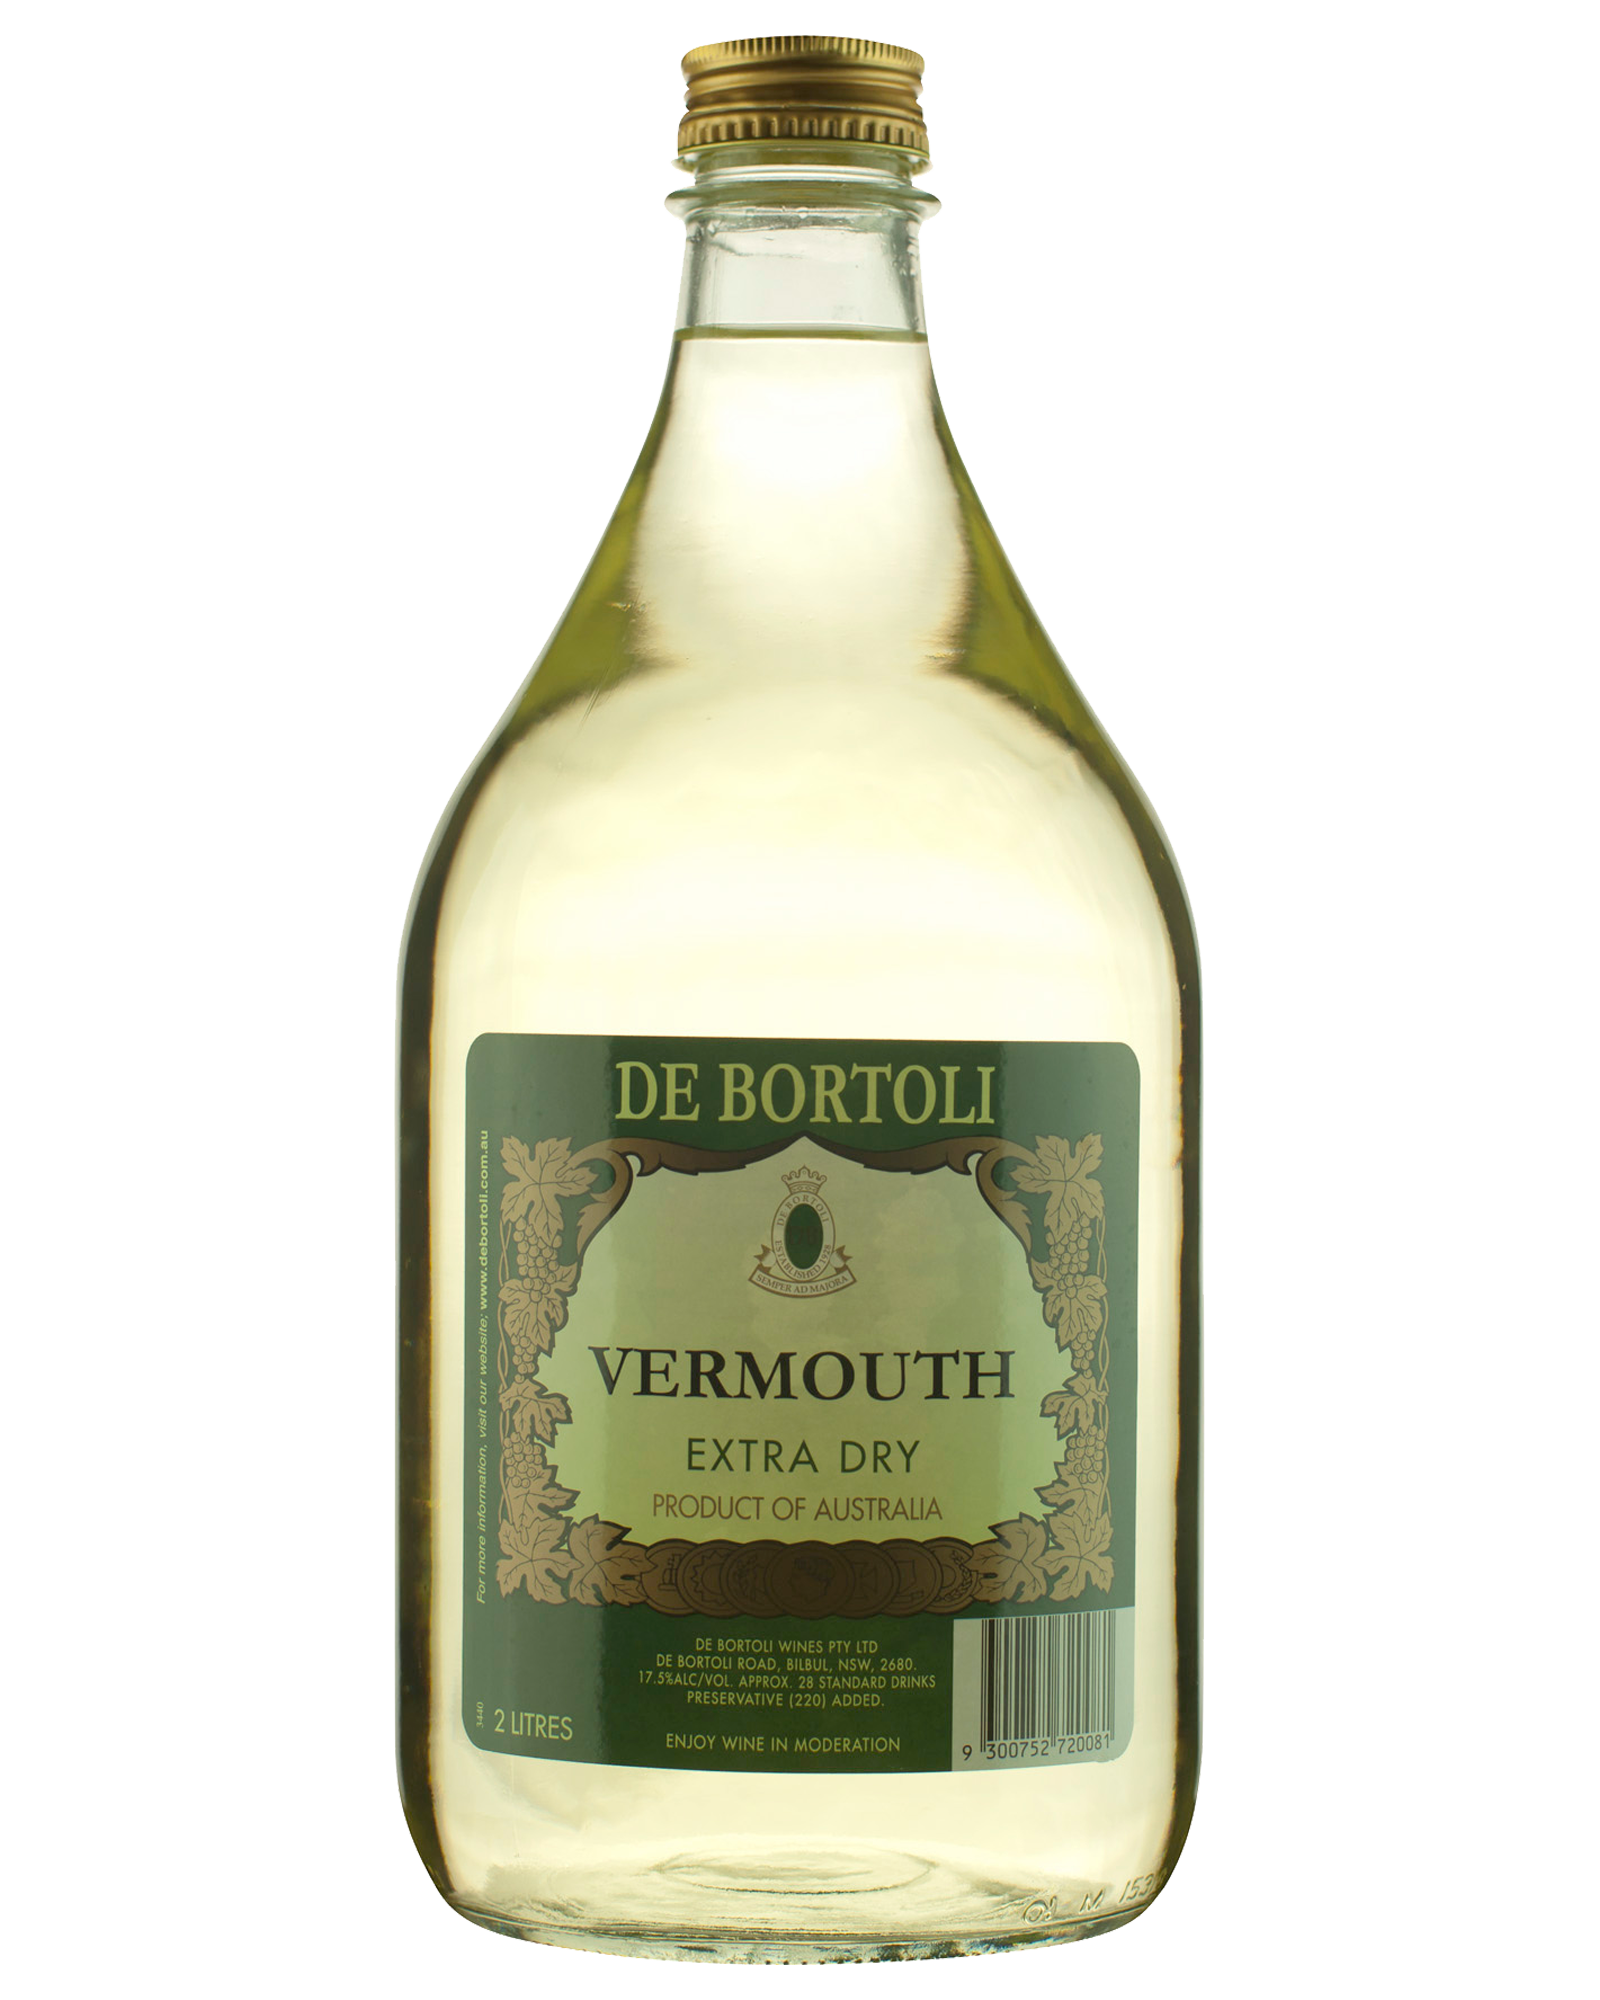 De Bortoli Extra Dry Vermouth 2L